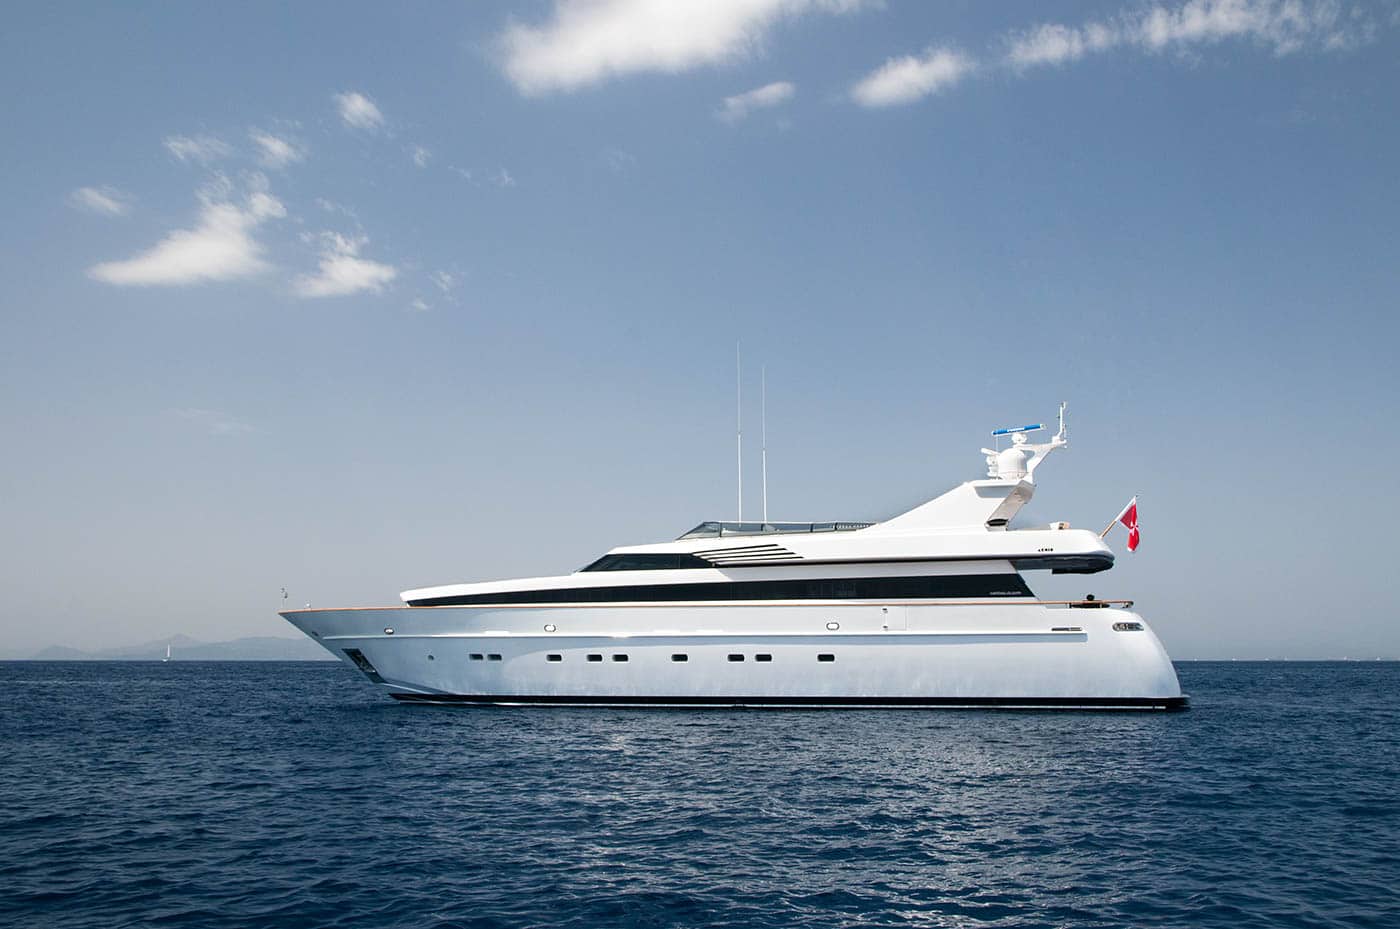 regina k yacht